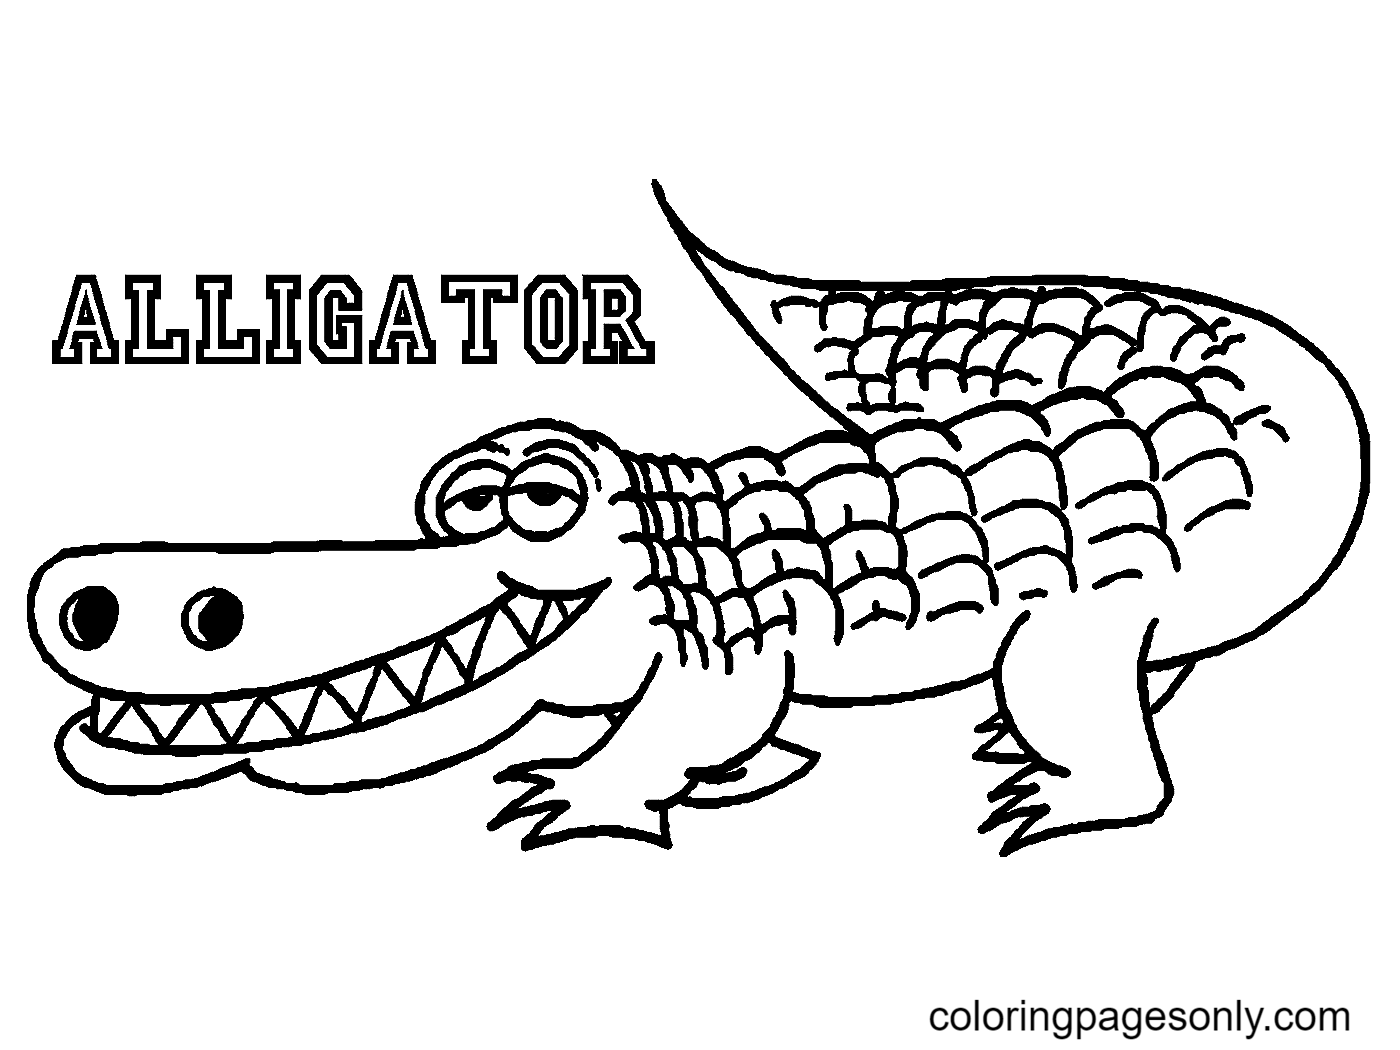 Alligator 可从 Alligator 打印